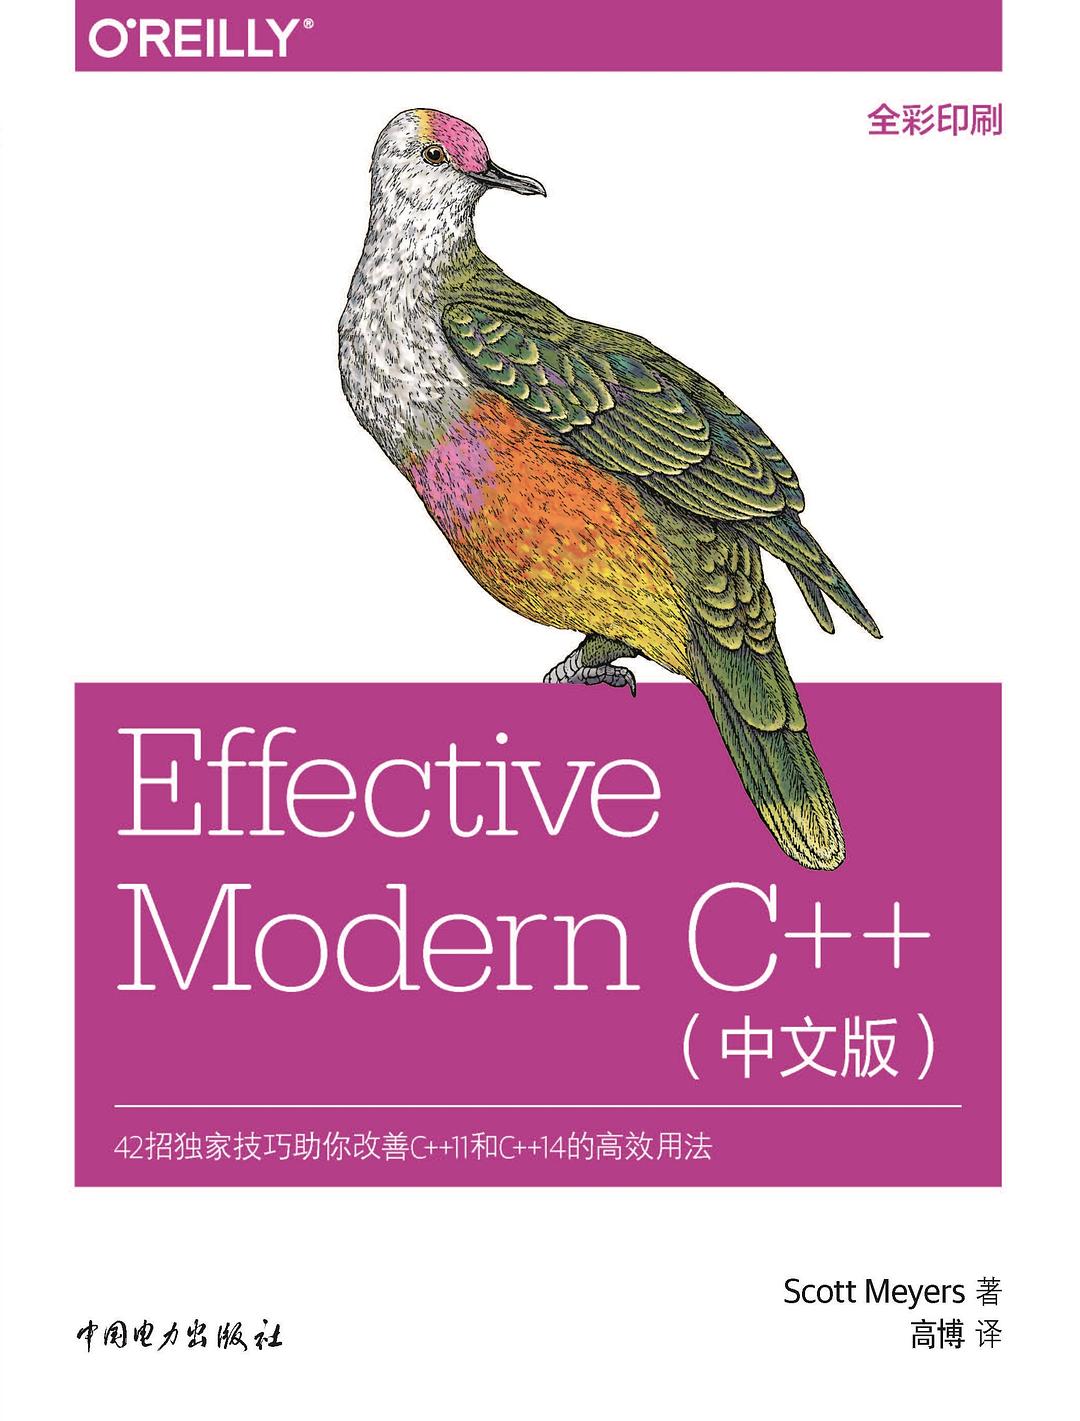 Effective Modern C++ 简体中文版-好书天下